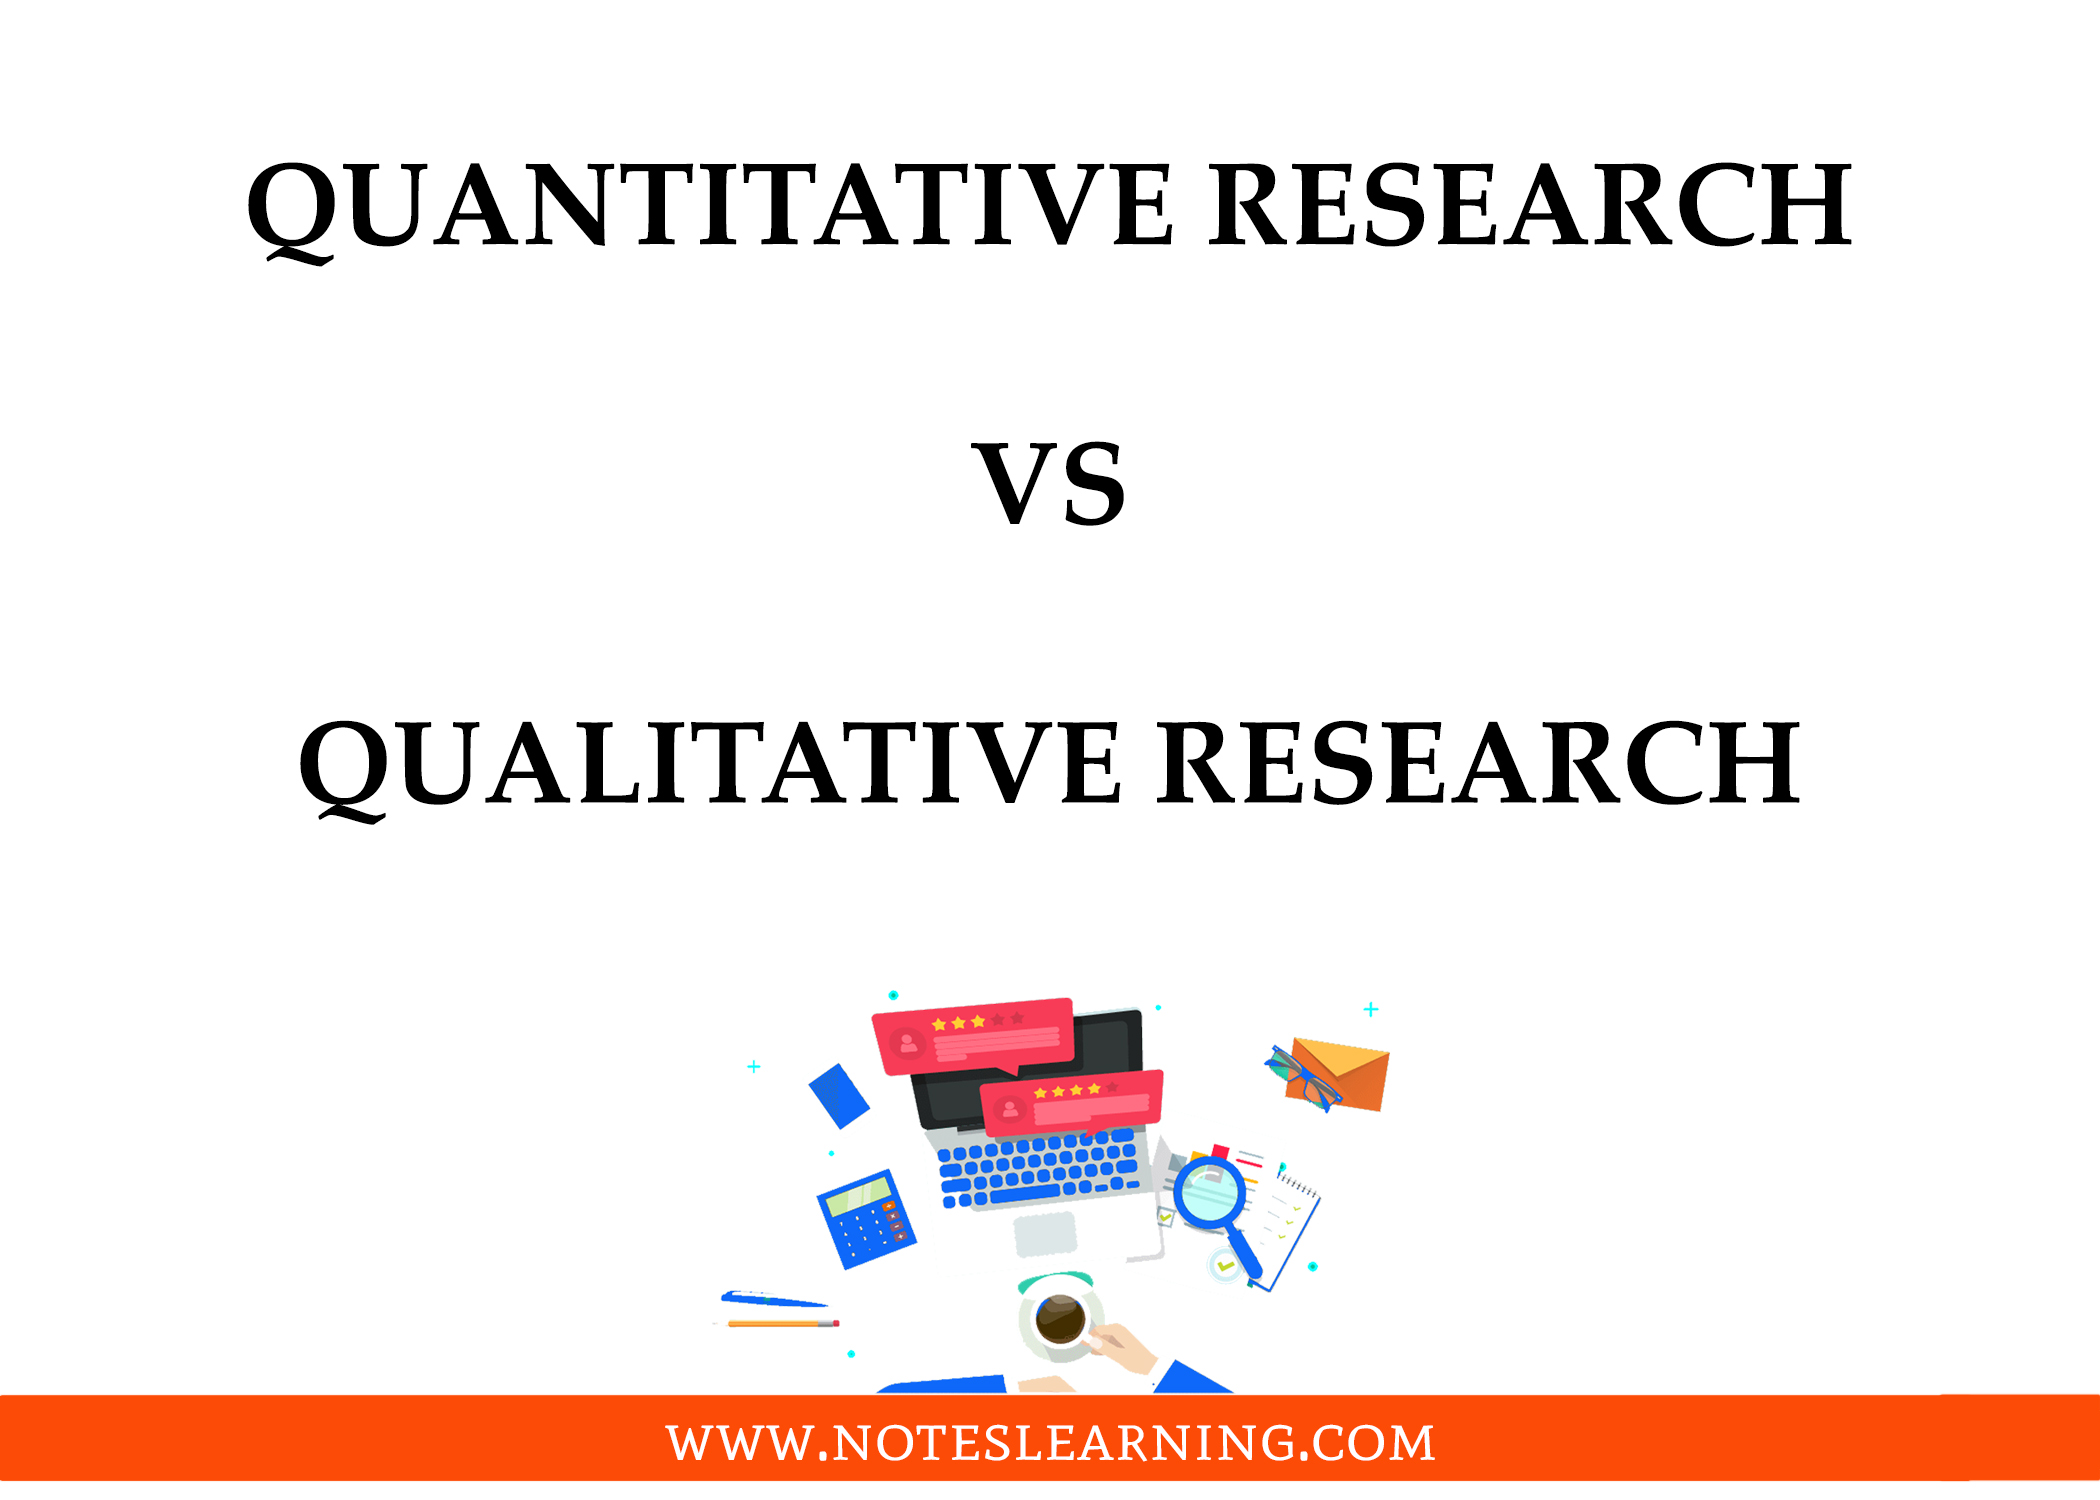 Quantitative Research vs Qualitative Research Notes Learning